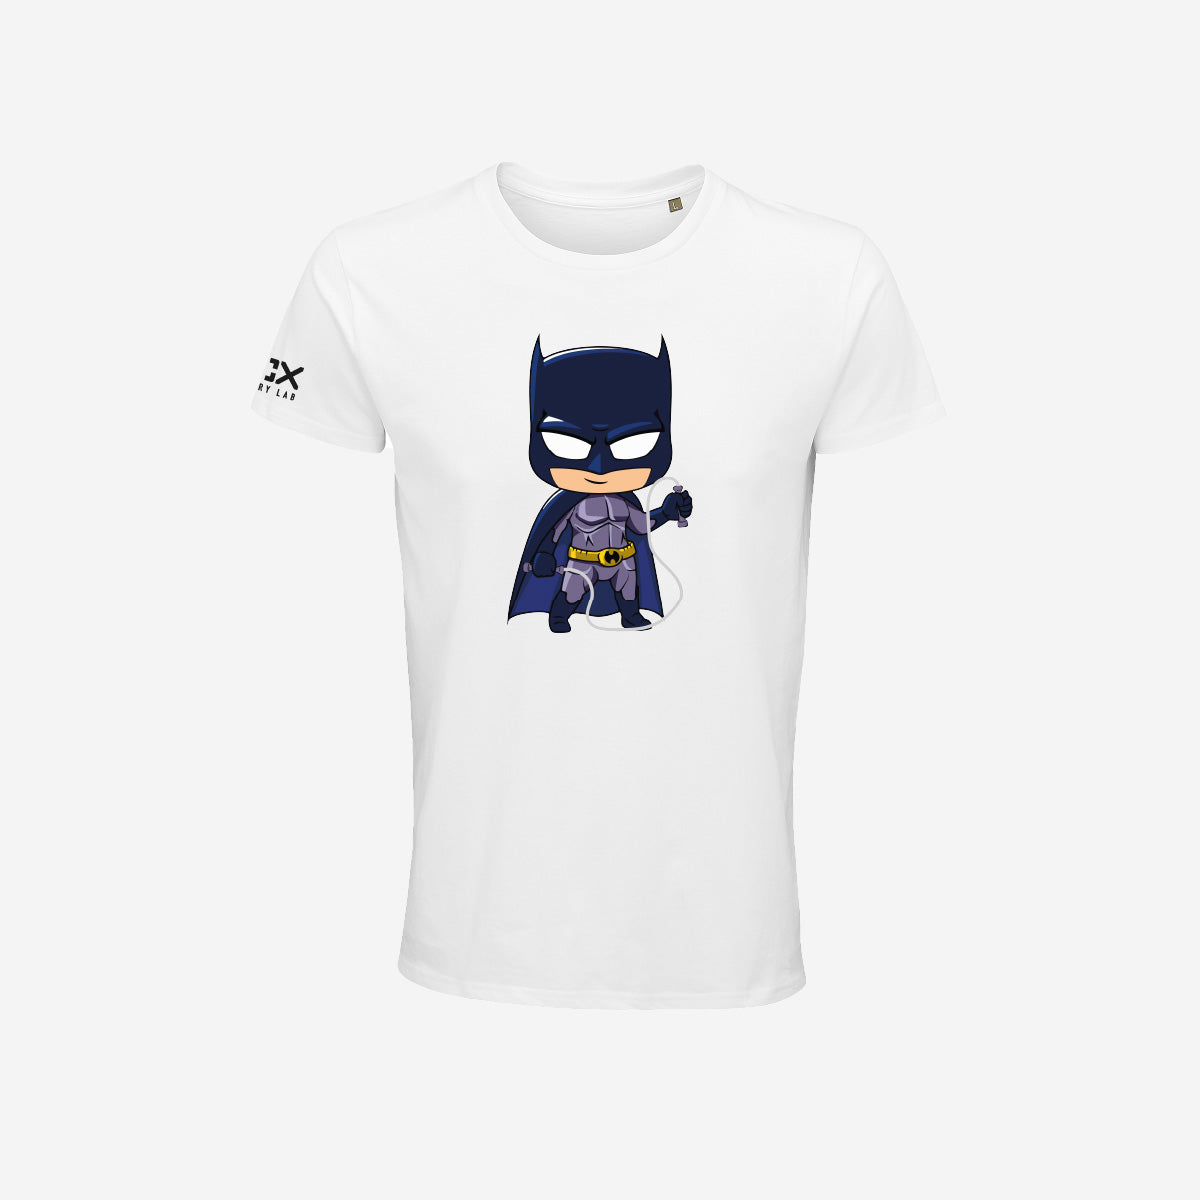 T-shirt Uomo - Batman 2